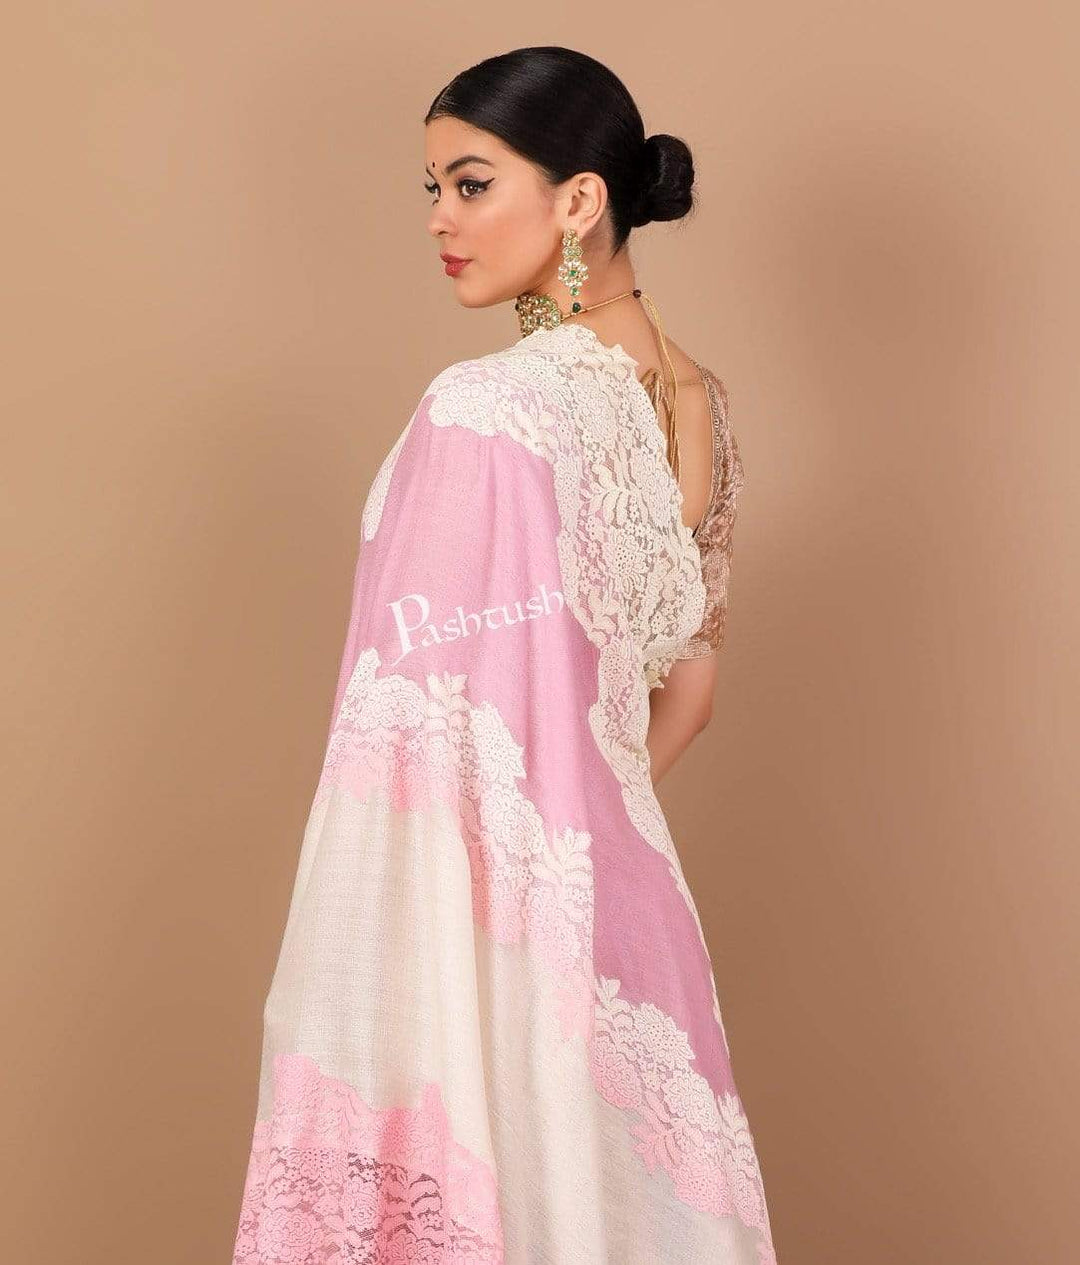 Pashtush India 70x200 Pashtush Womens L'Amour Lace Shawl Collection, Ivory and Soft Pink